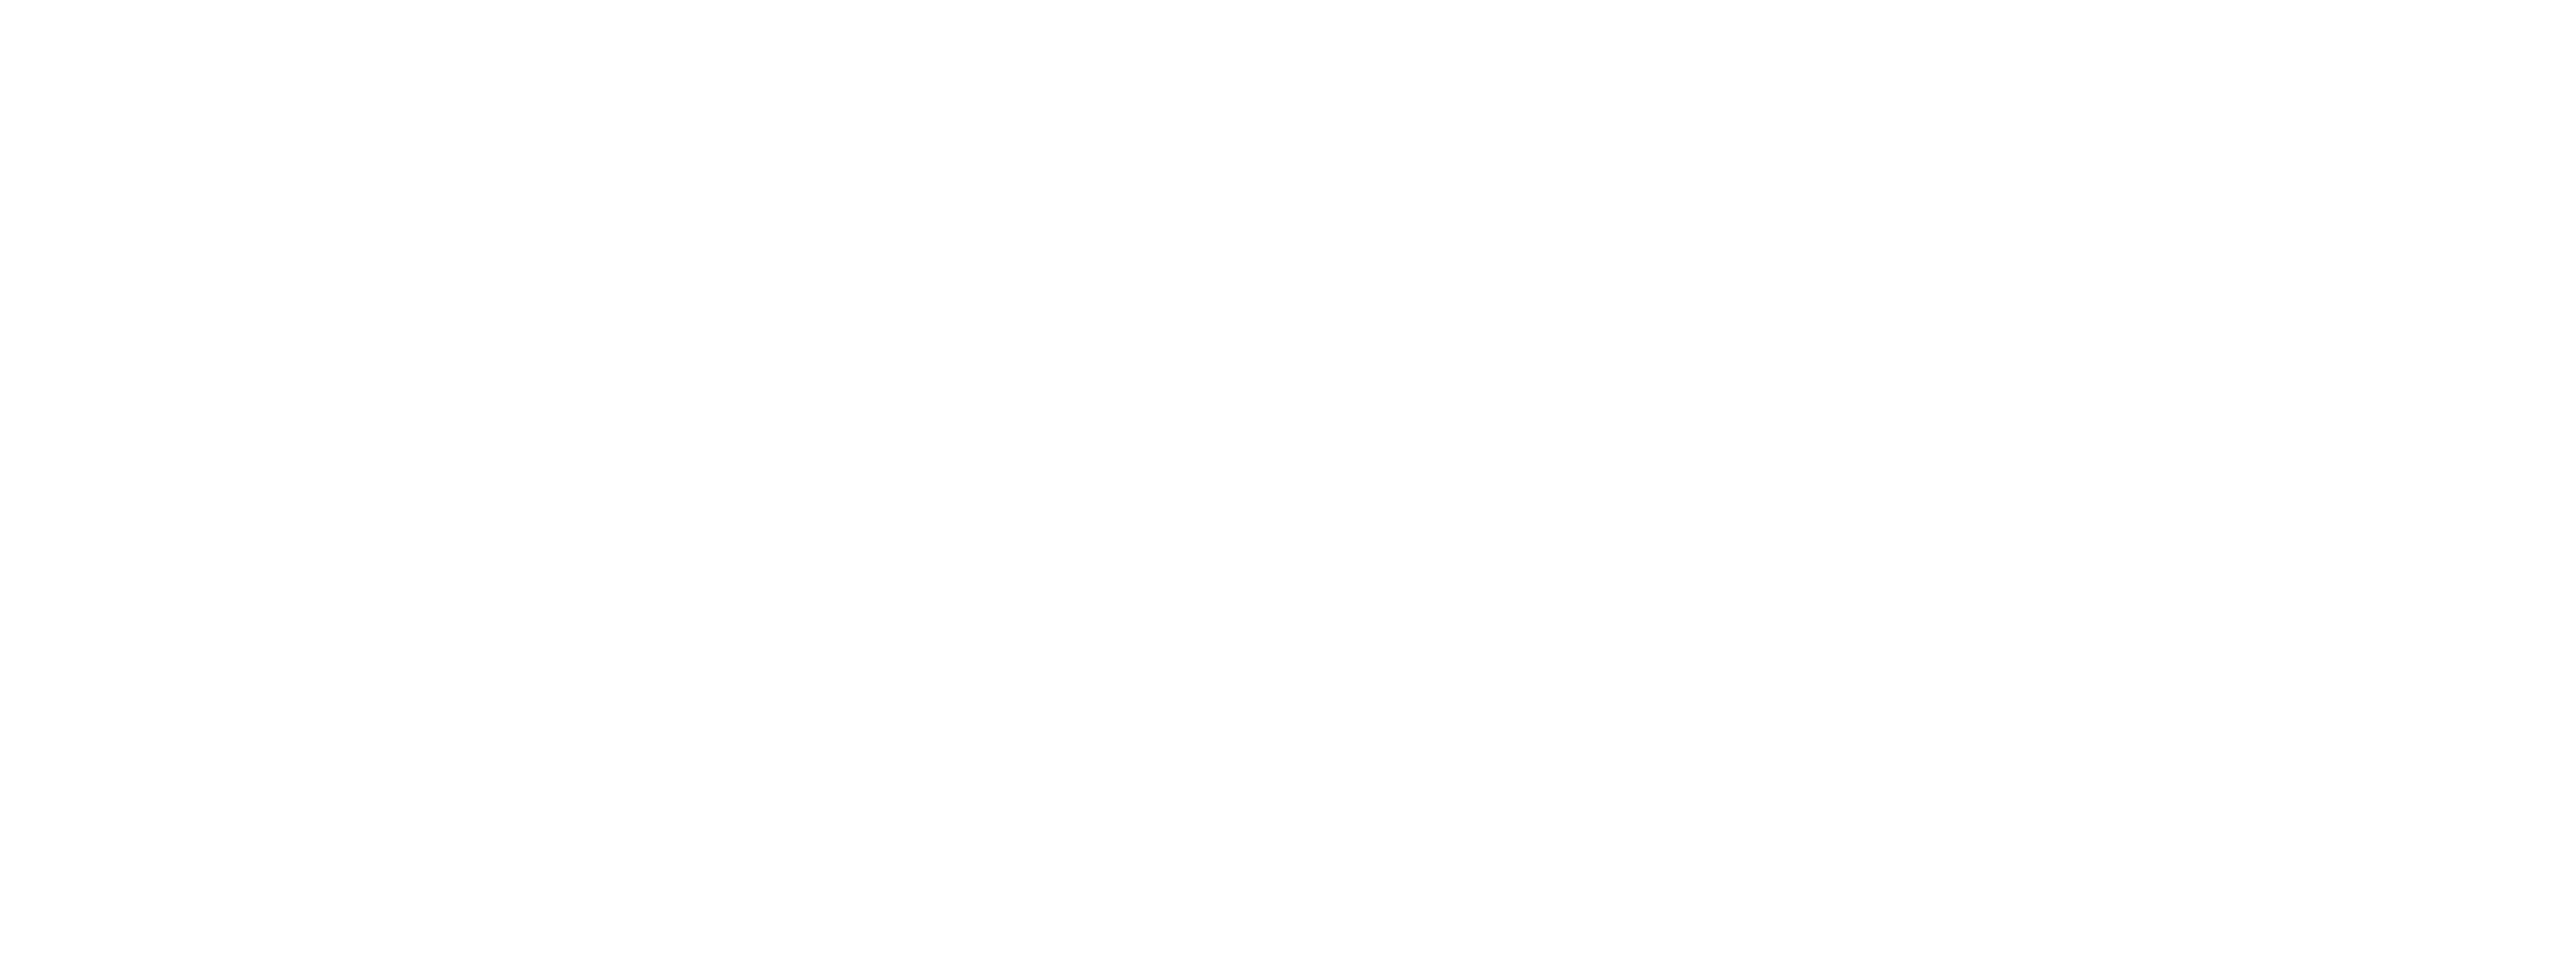 SRM Security